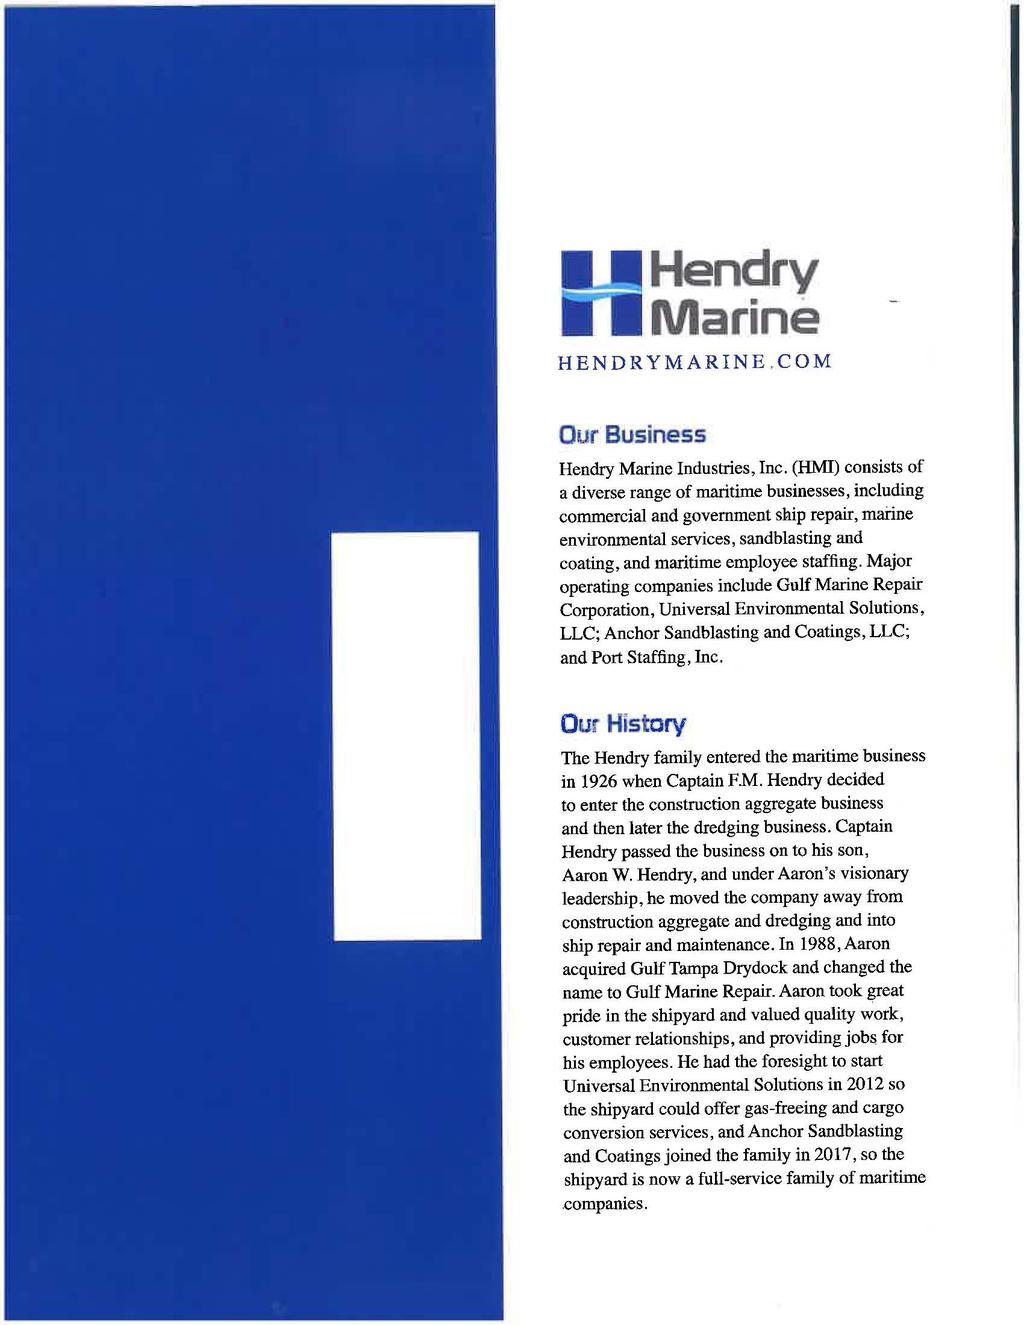 endry Marine HENDRYMARINE.COM Our Busines.s Hendry Marine Industries, Inc.